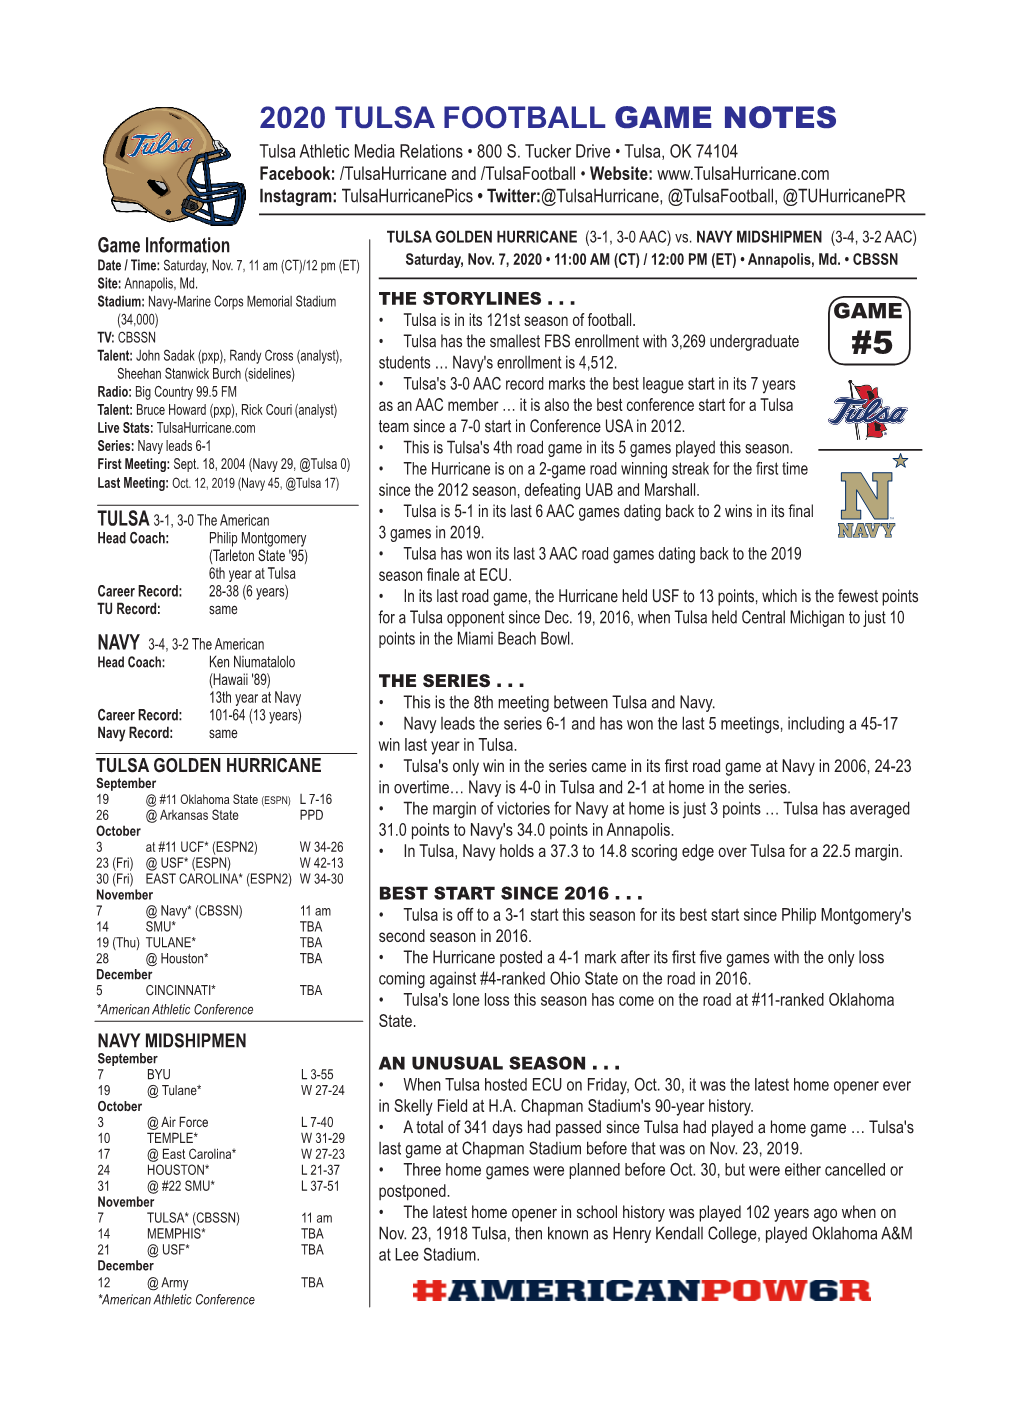 2020 TULSA FOOTBALL GAME NOTES Tulsa Athletic Media Relations • 800 S